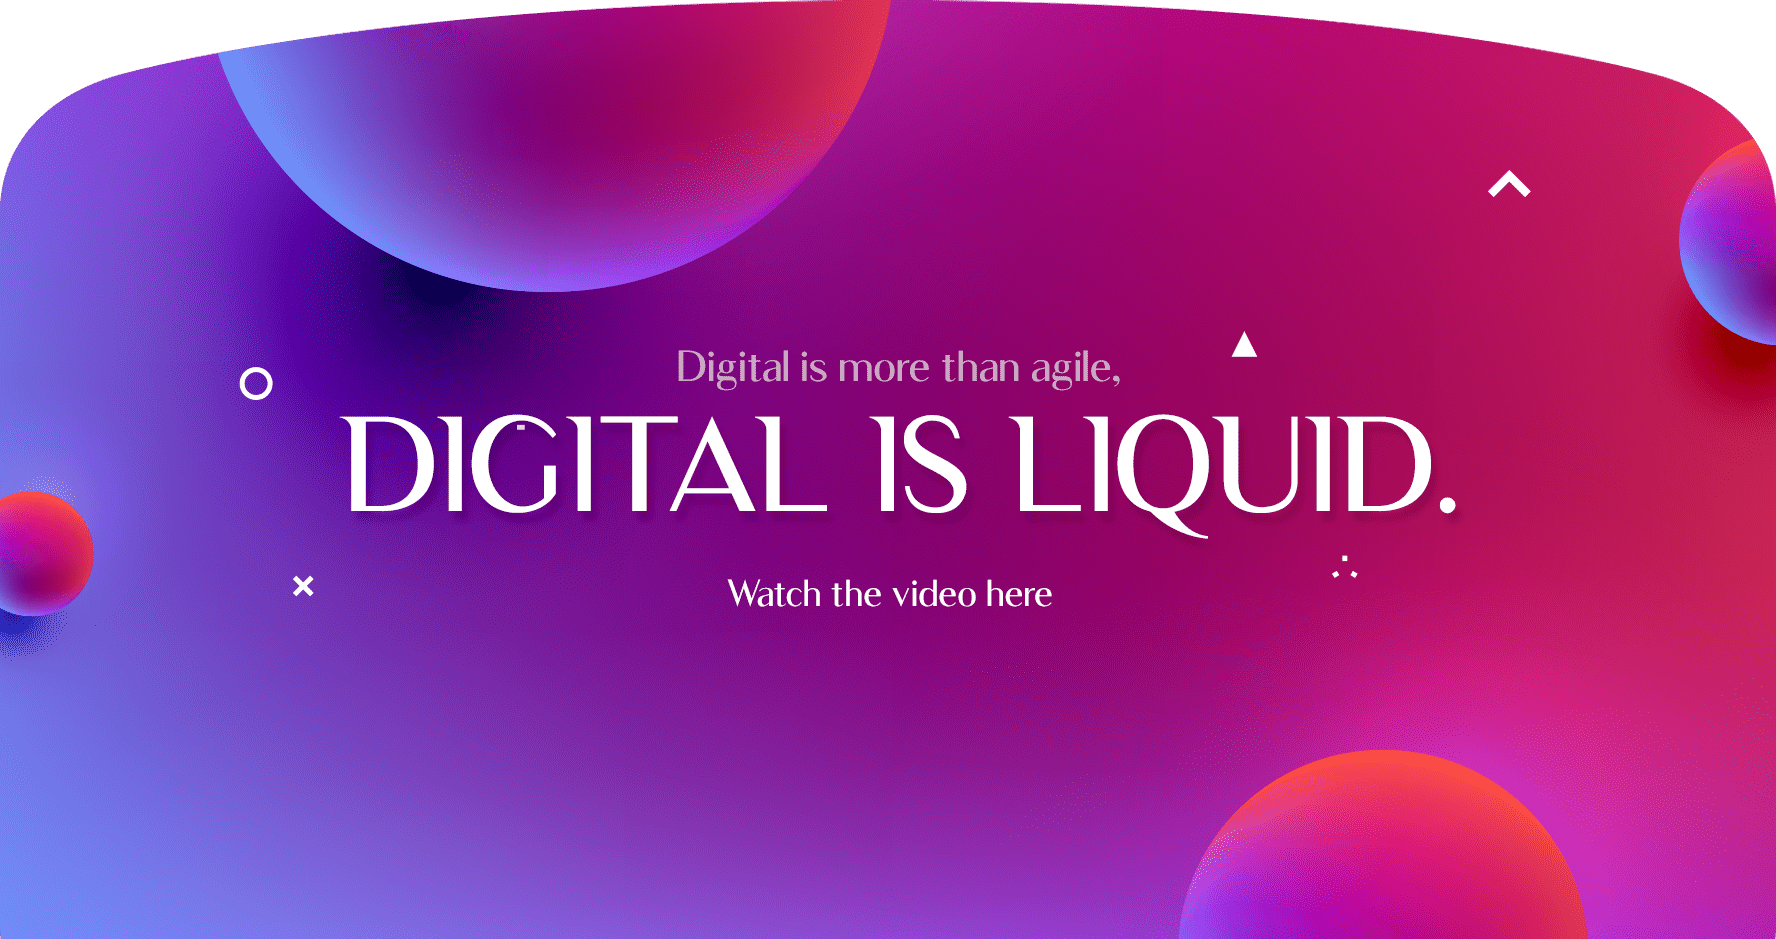 Digital is more than agile, digital is liquid